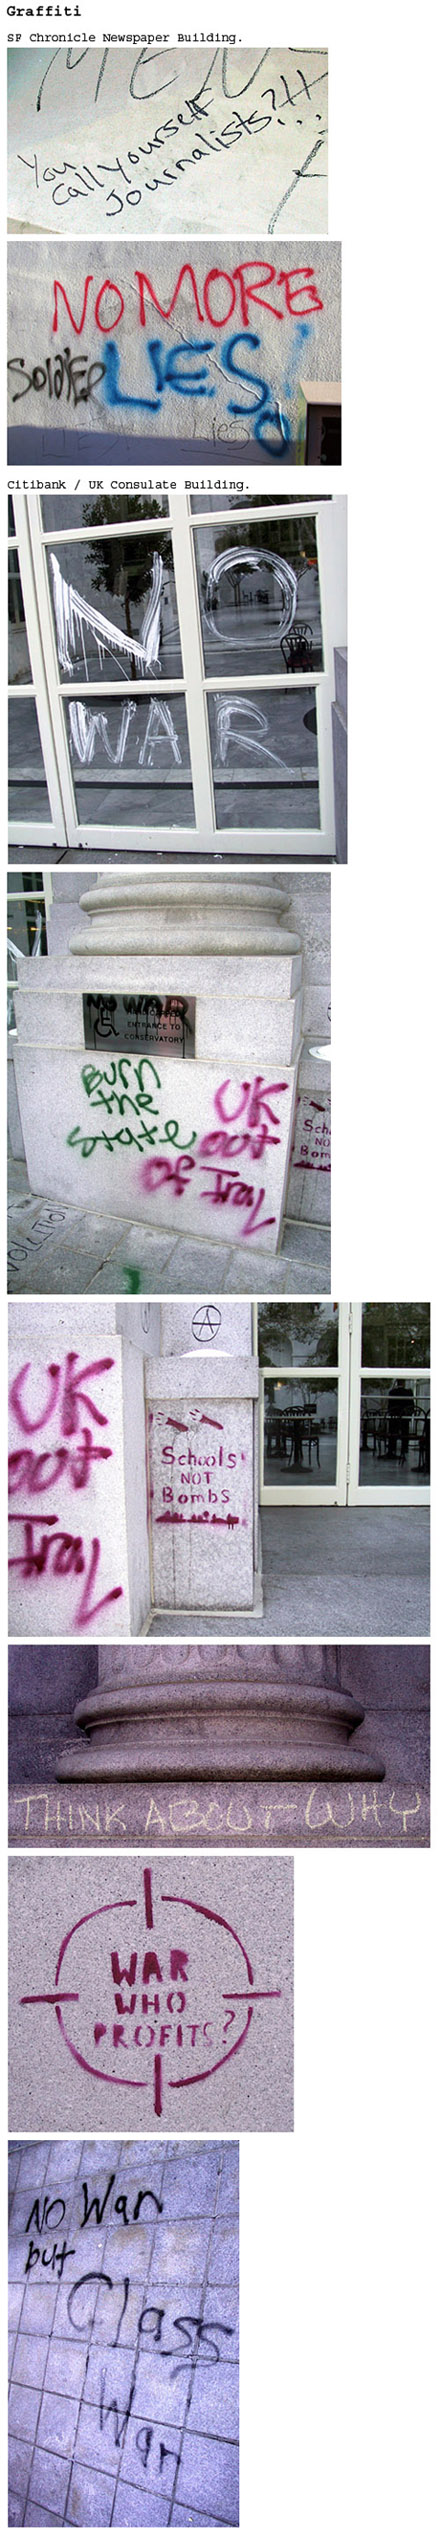 j18b_11_graffiti_chronicle_citibank_uk_consulate.jpg 